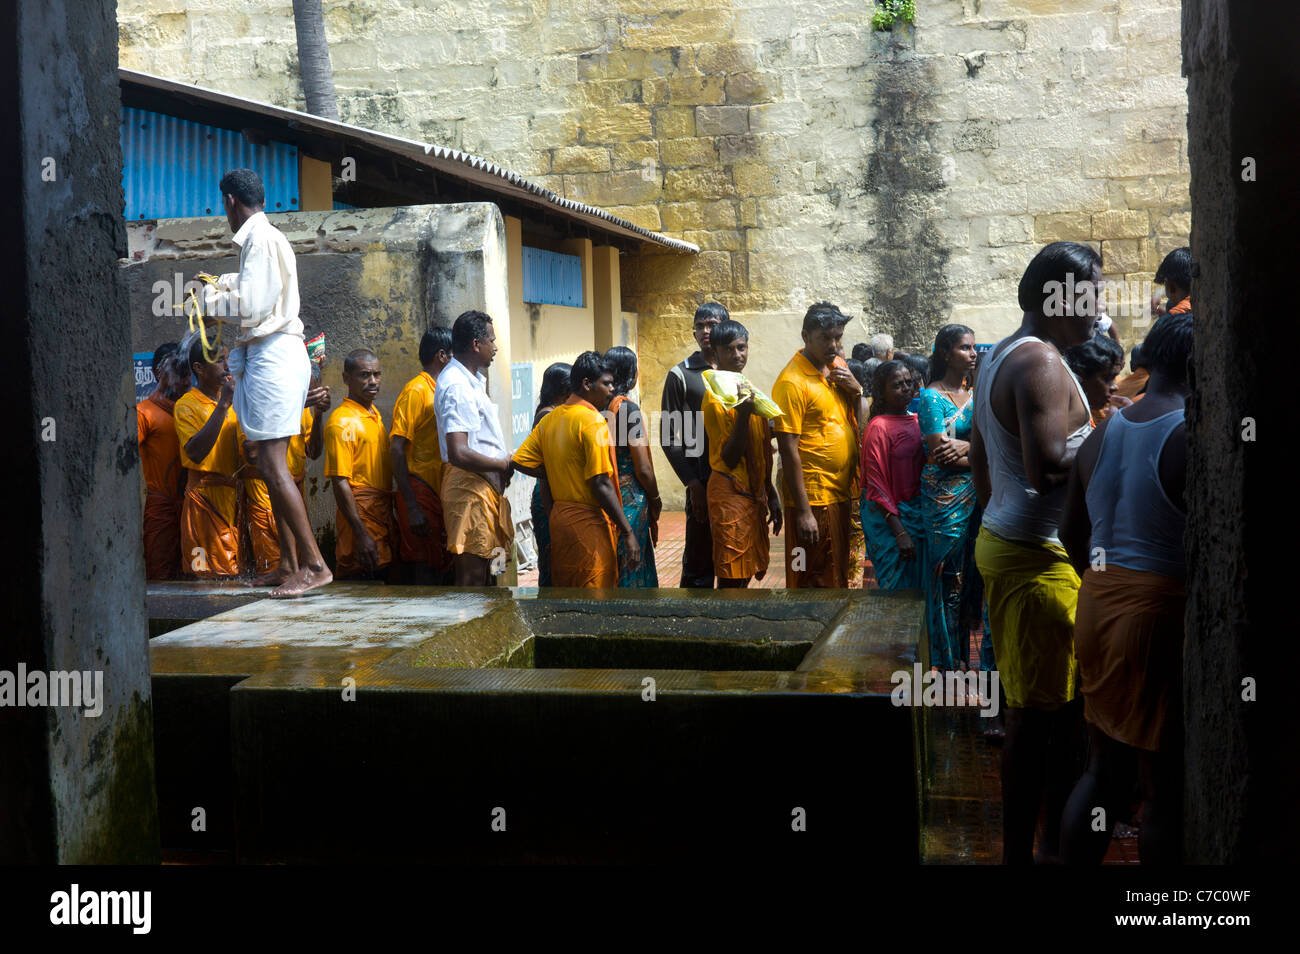 Hindu pilgrims waiting in line to recieve the holy bath at the Ramanathaswamy Temple in Rameswaram, Tamil Nadu, India. Stock Photo